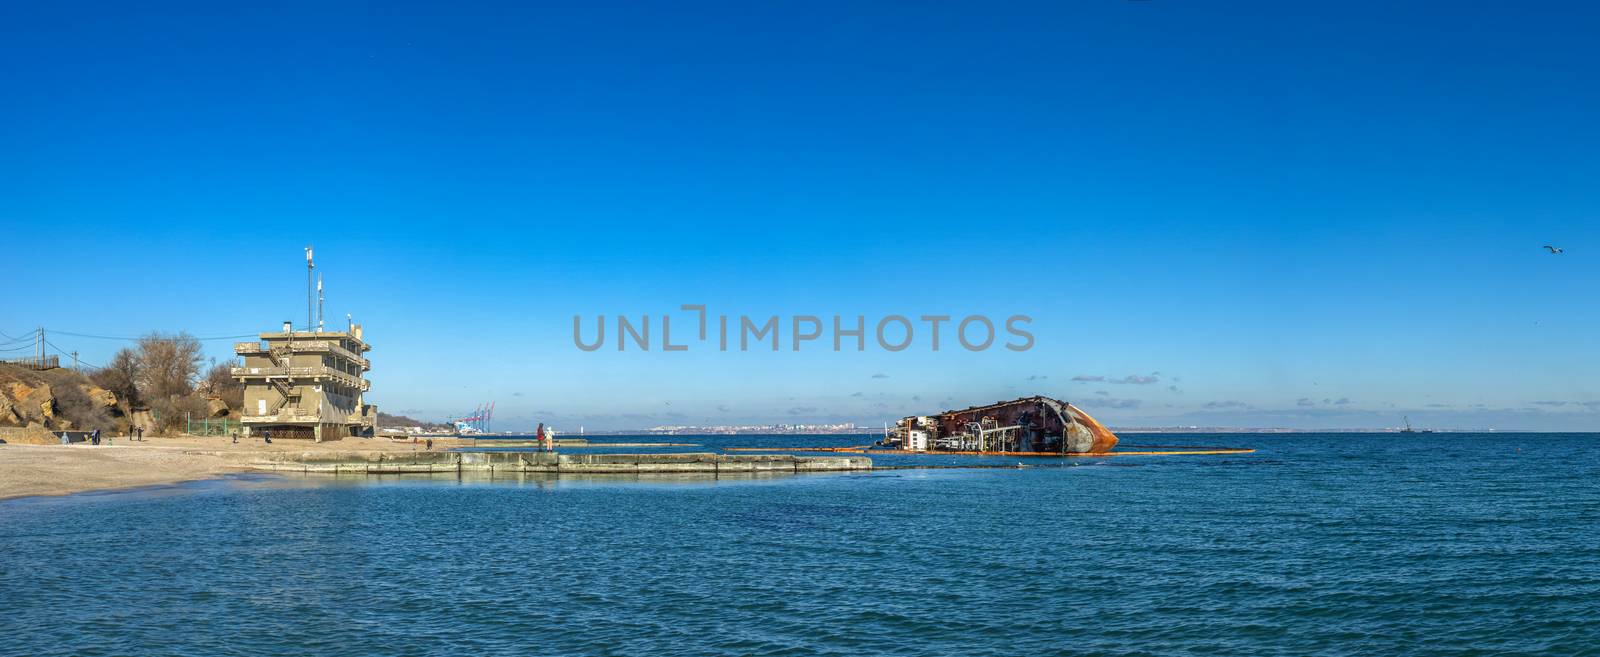 Stranded tanker off the coast of Odessa, Ukraine by Multipedia